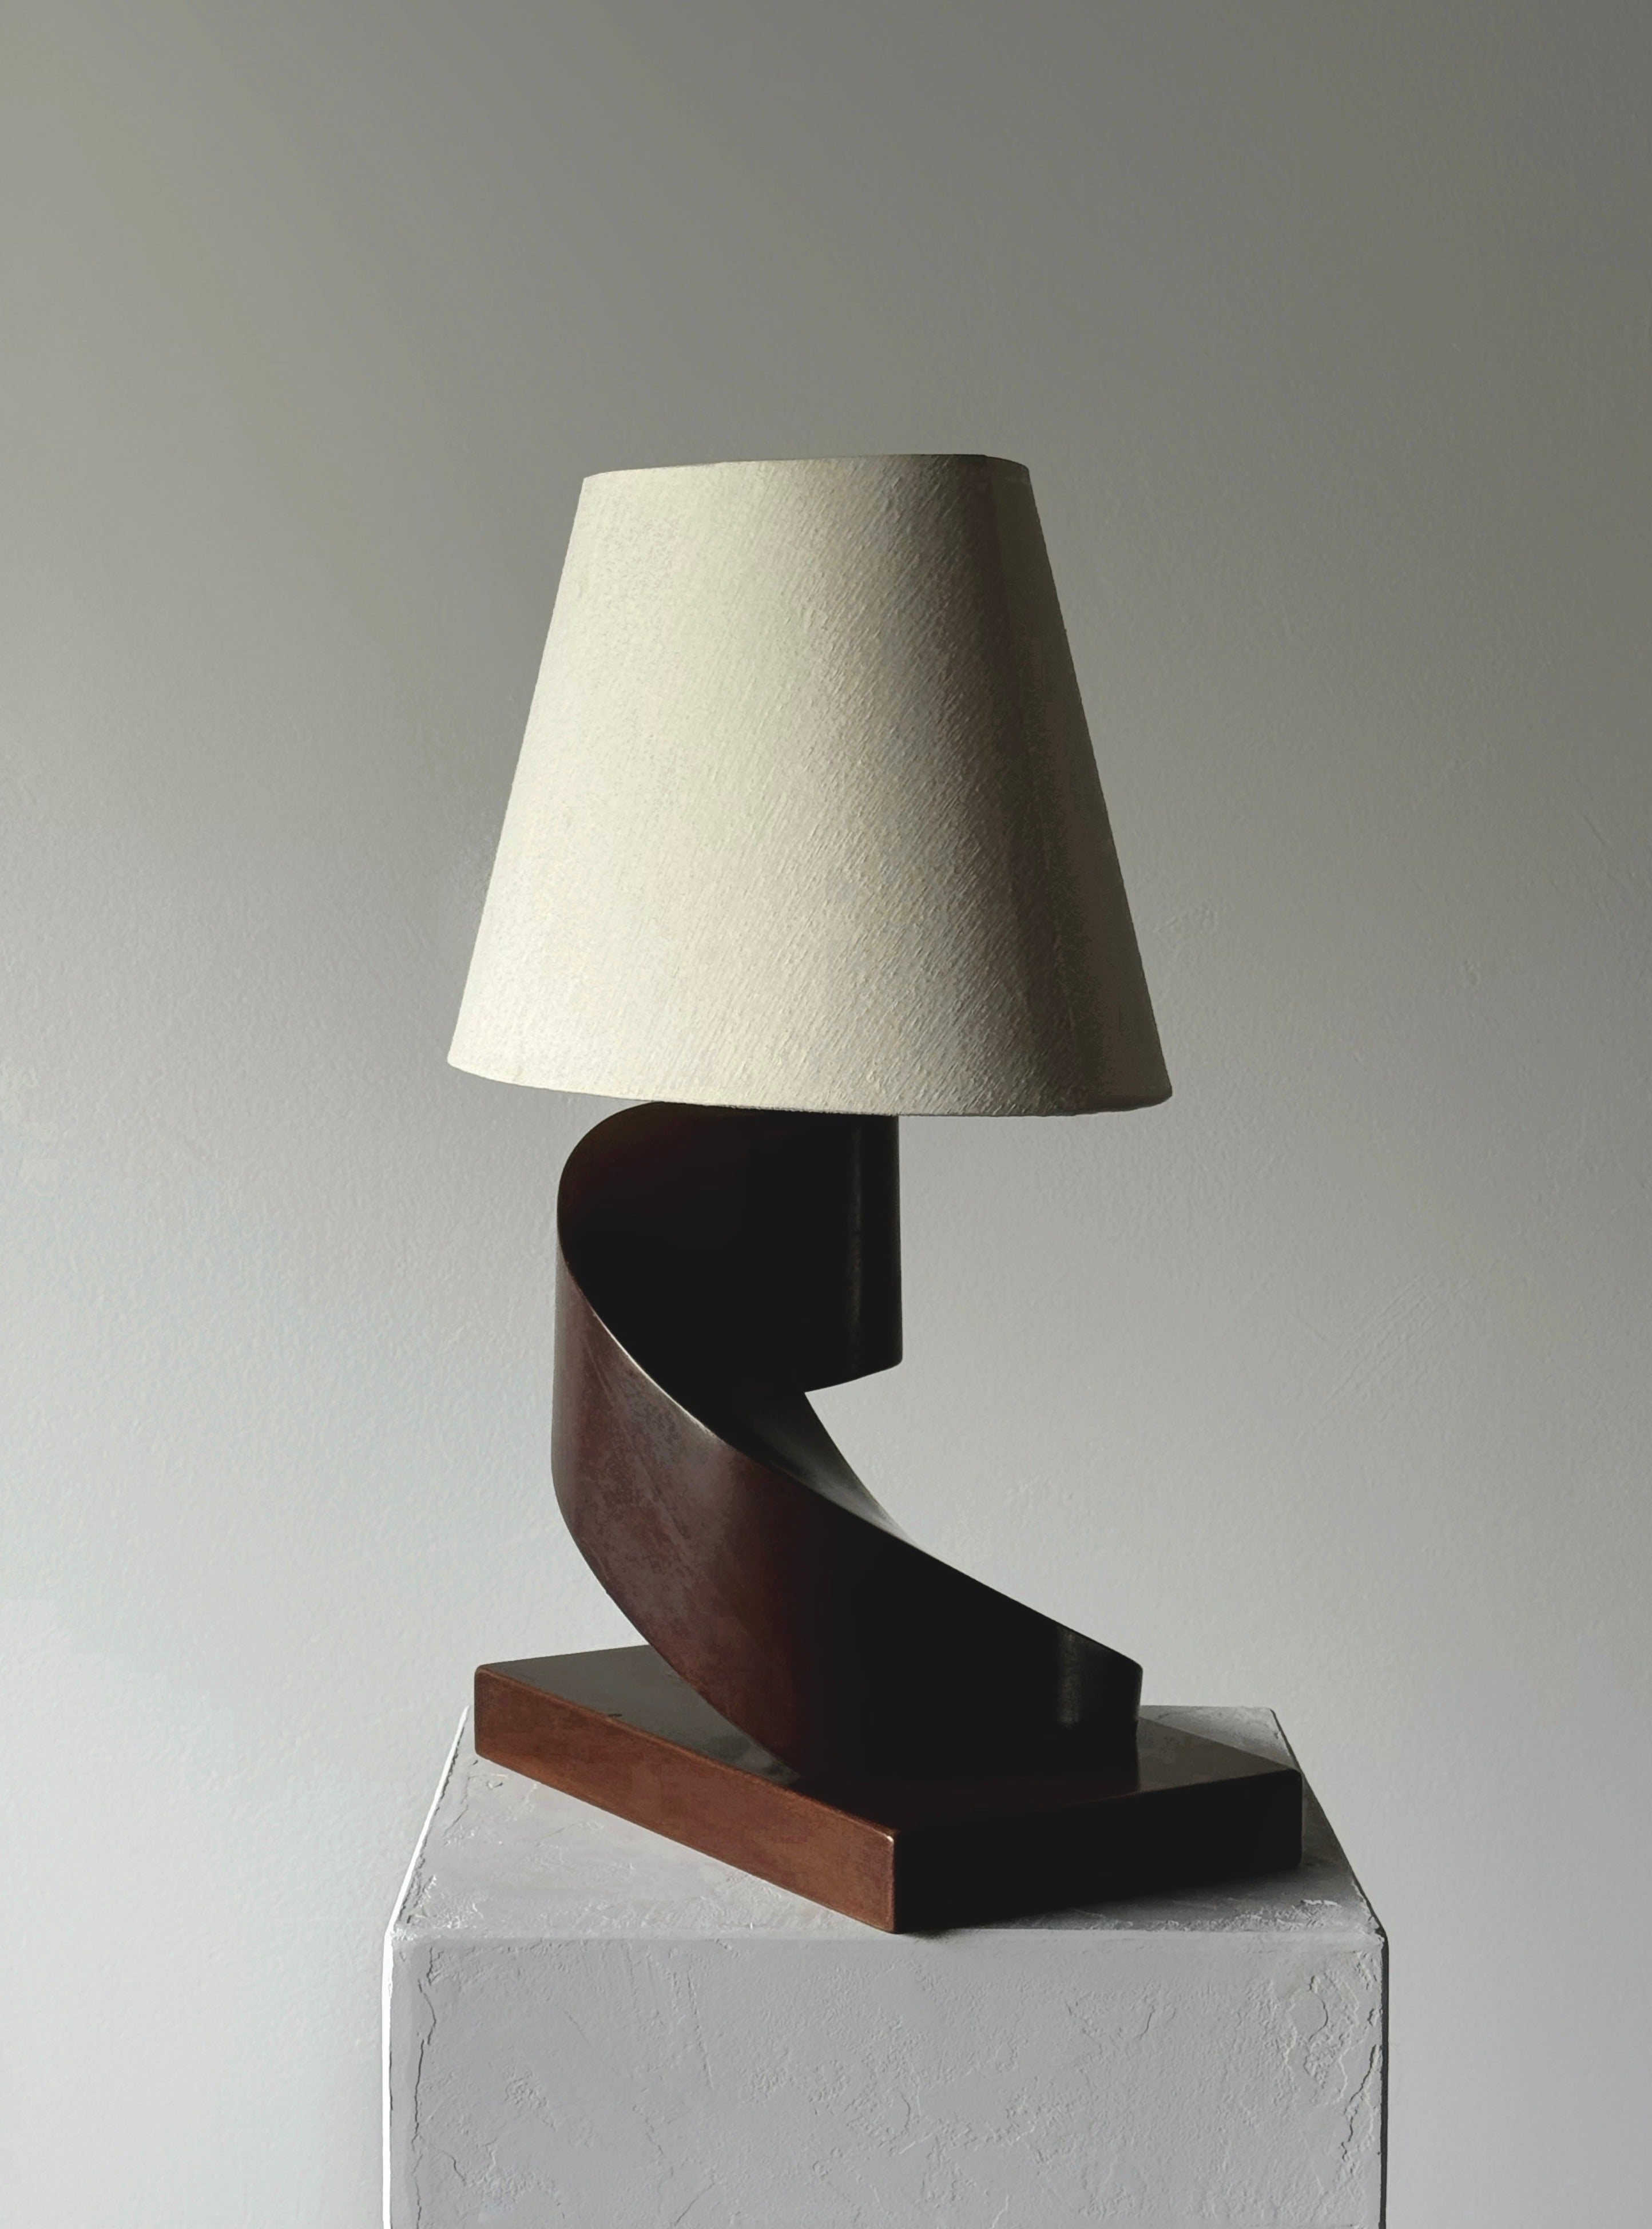 Danish Art Deco Sculptural Table Lamp in Solid Wood, 1930s